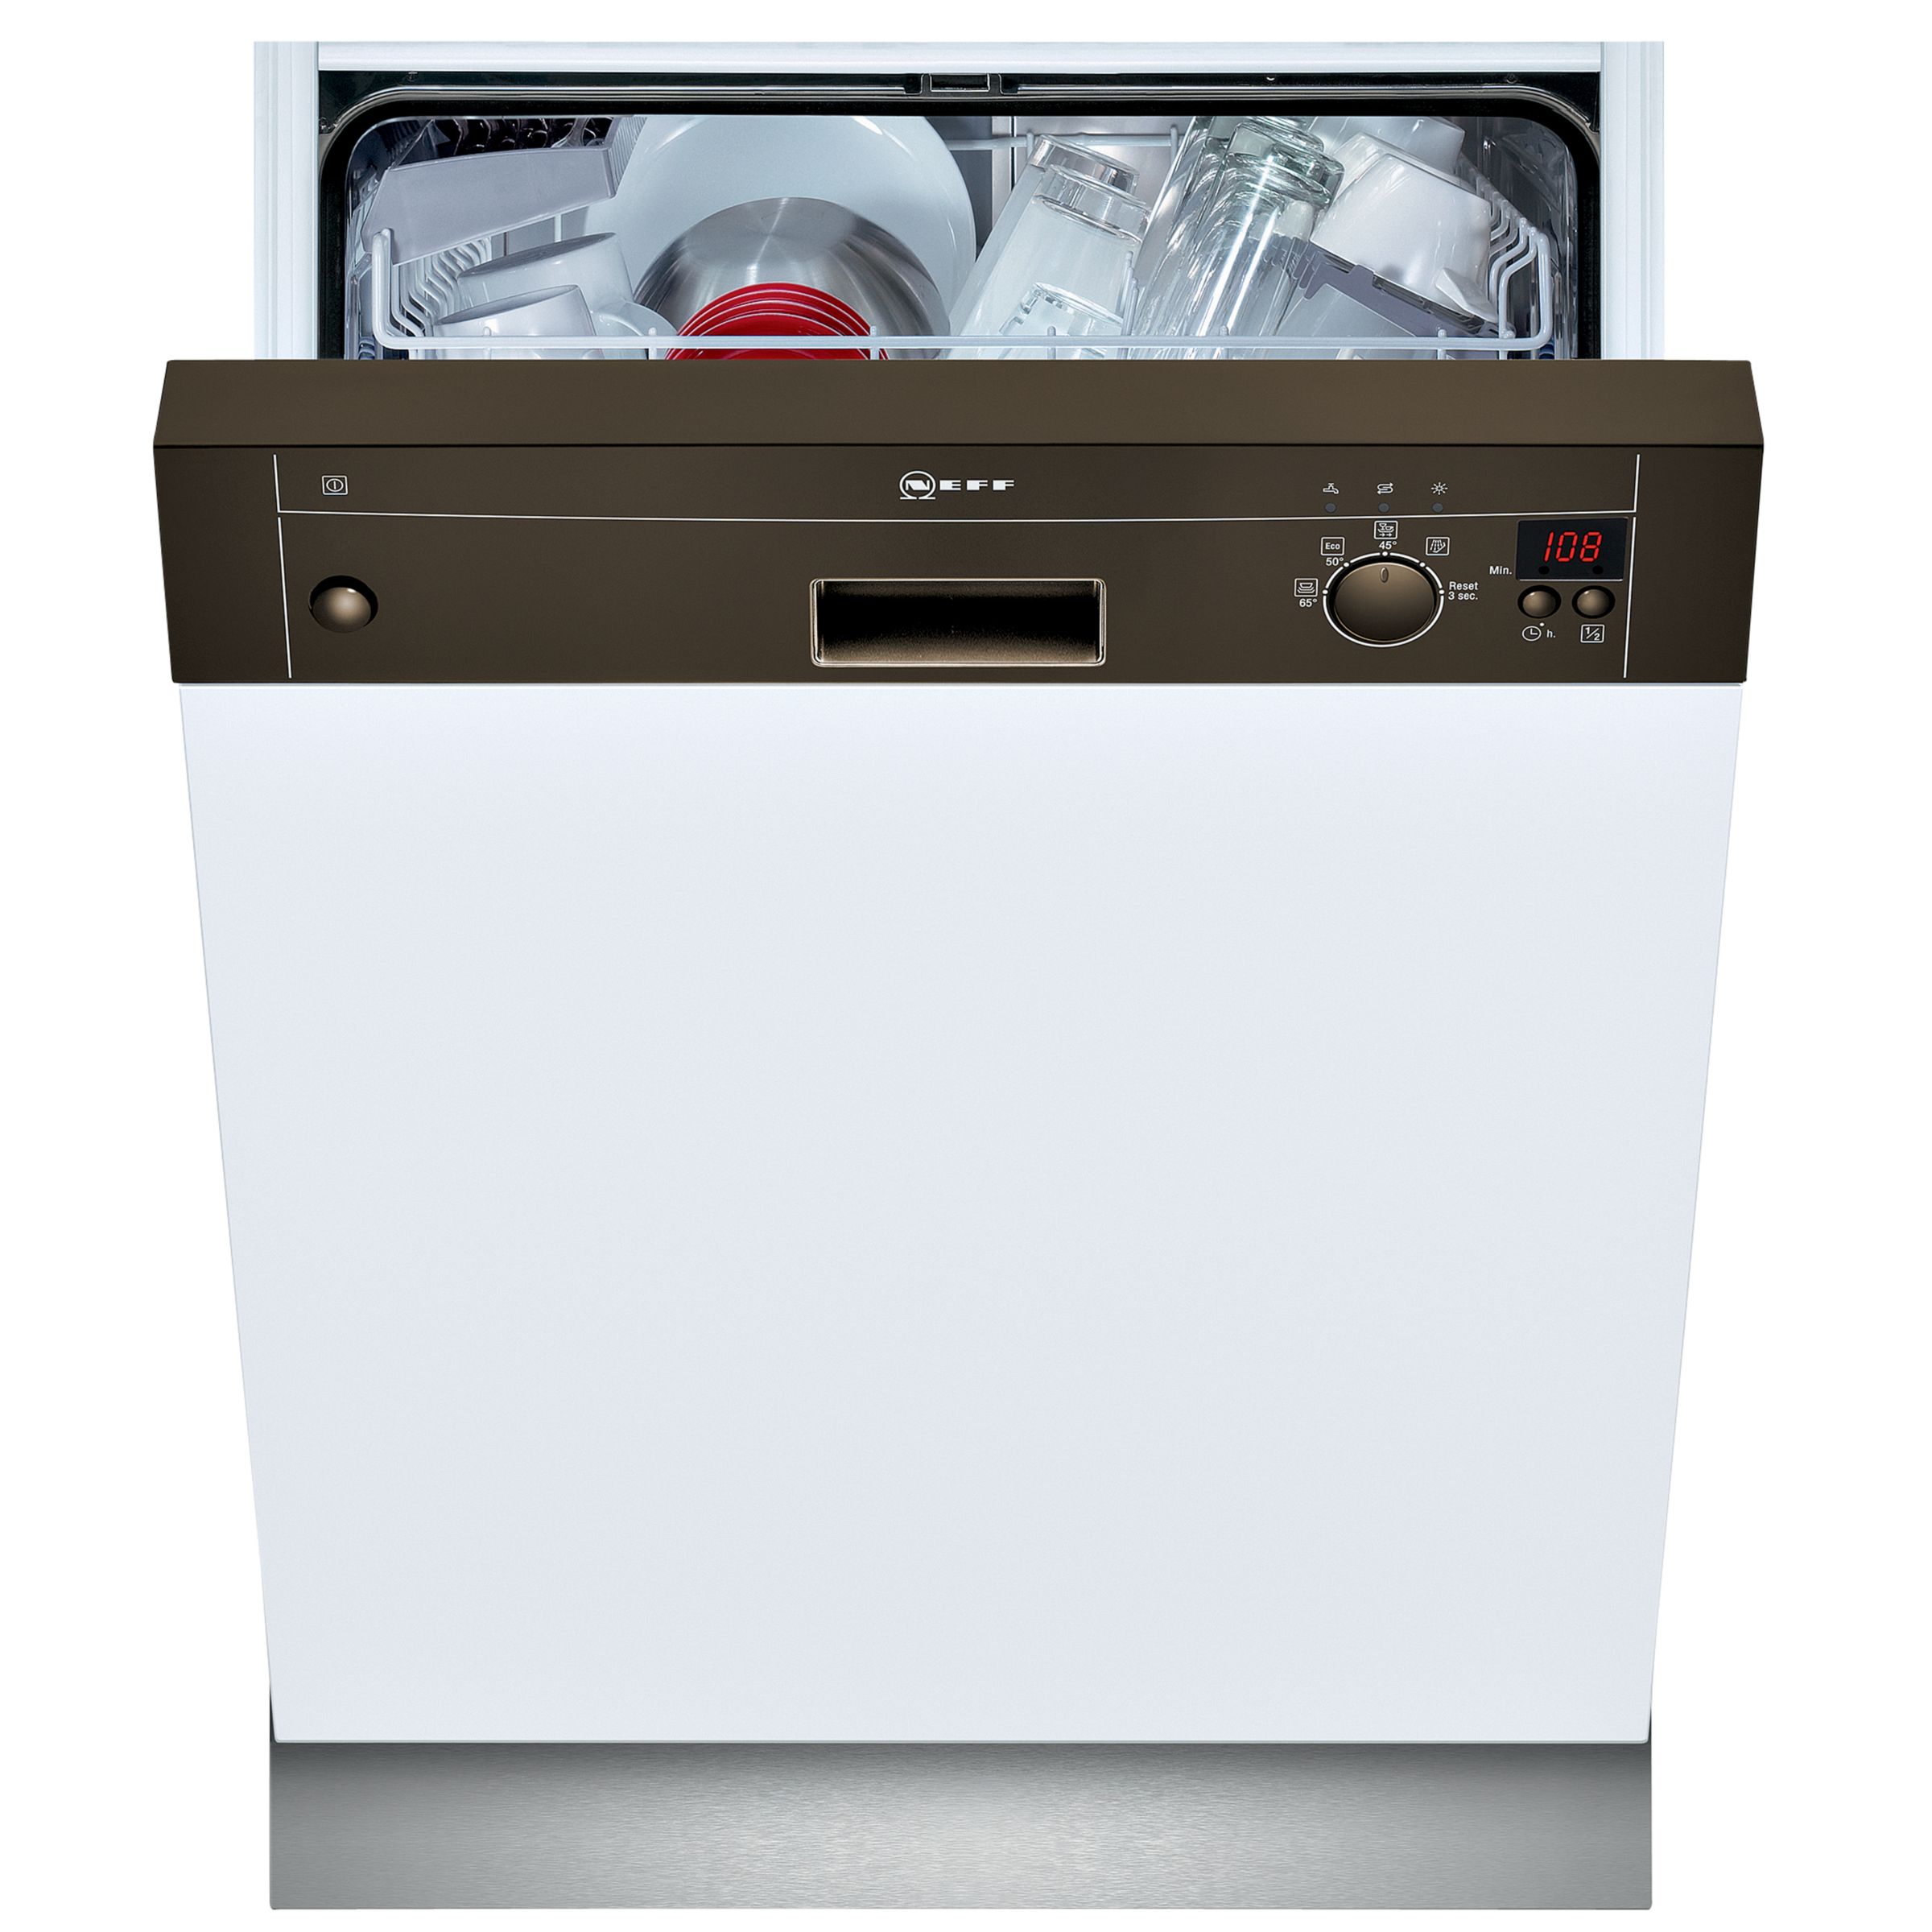 Neff S44E45B0GB Semi-Integrated Dishwasher, Brown at John Lewis